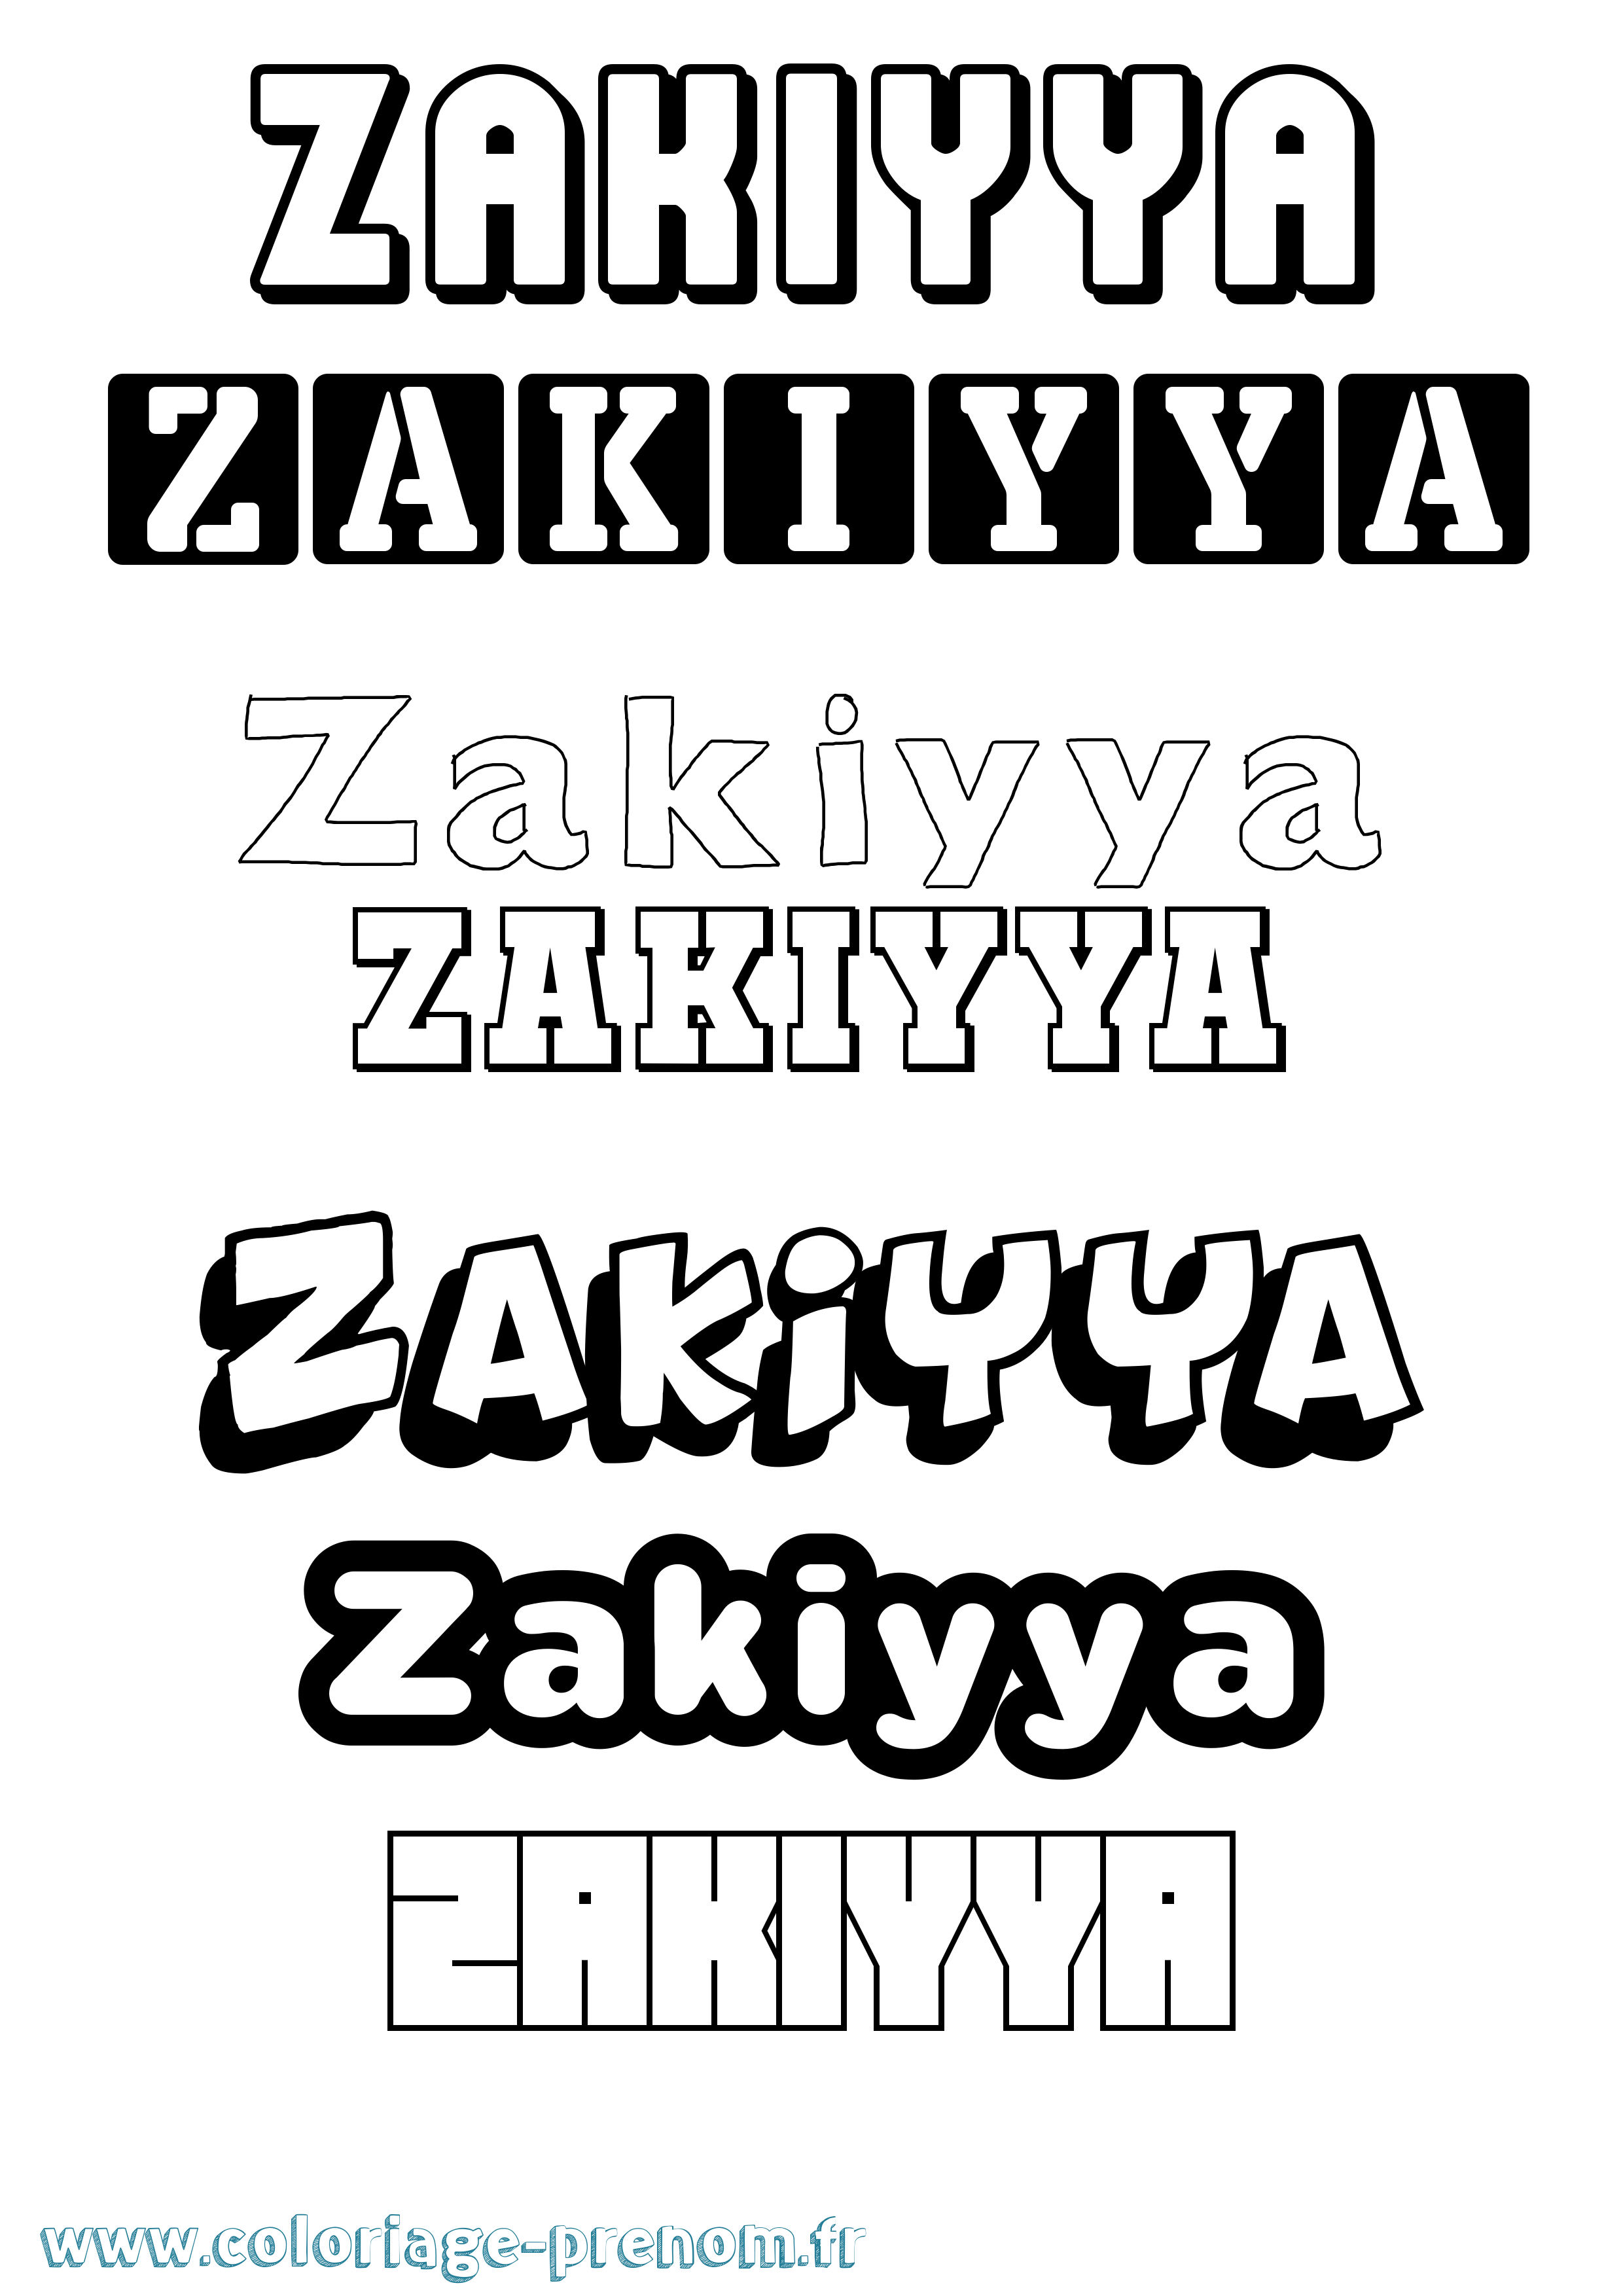 Coloriage prénom Zakiyya Simple